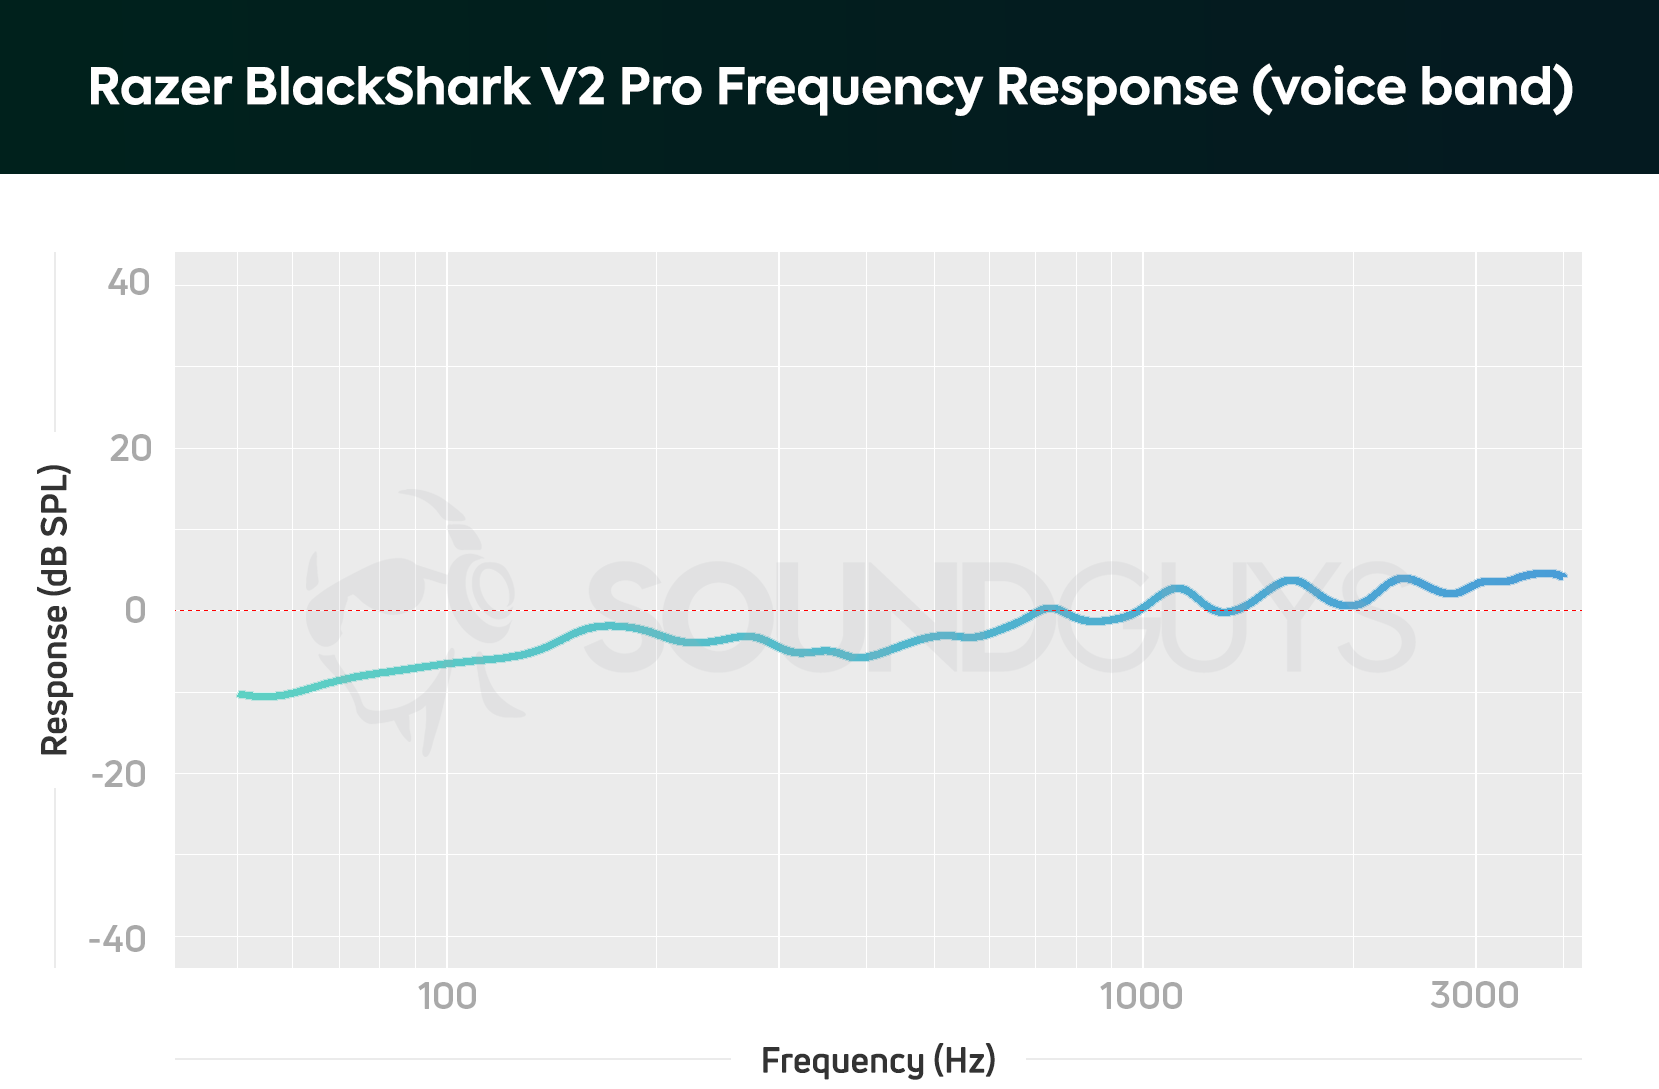 Razer BlackShark V2 review: An standout gaming headset - SoundGuys